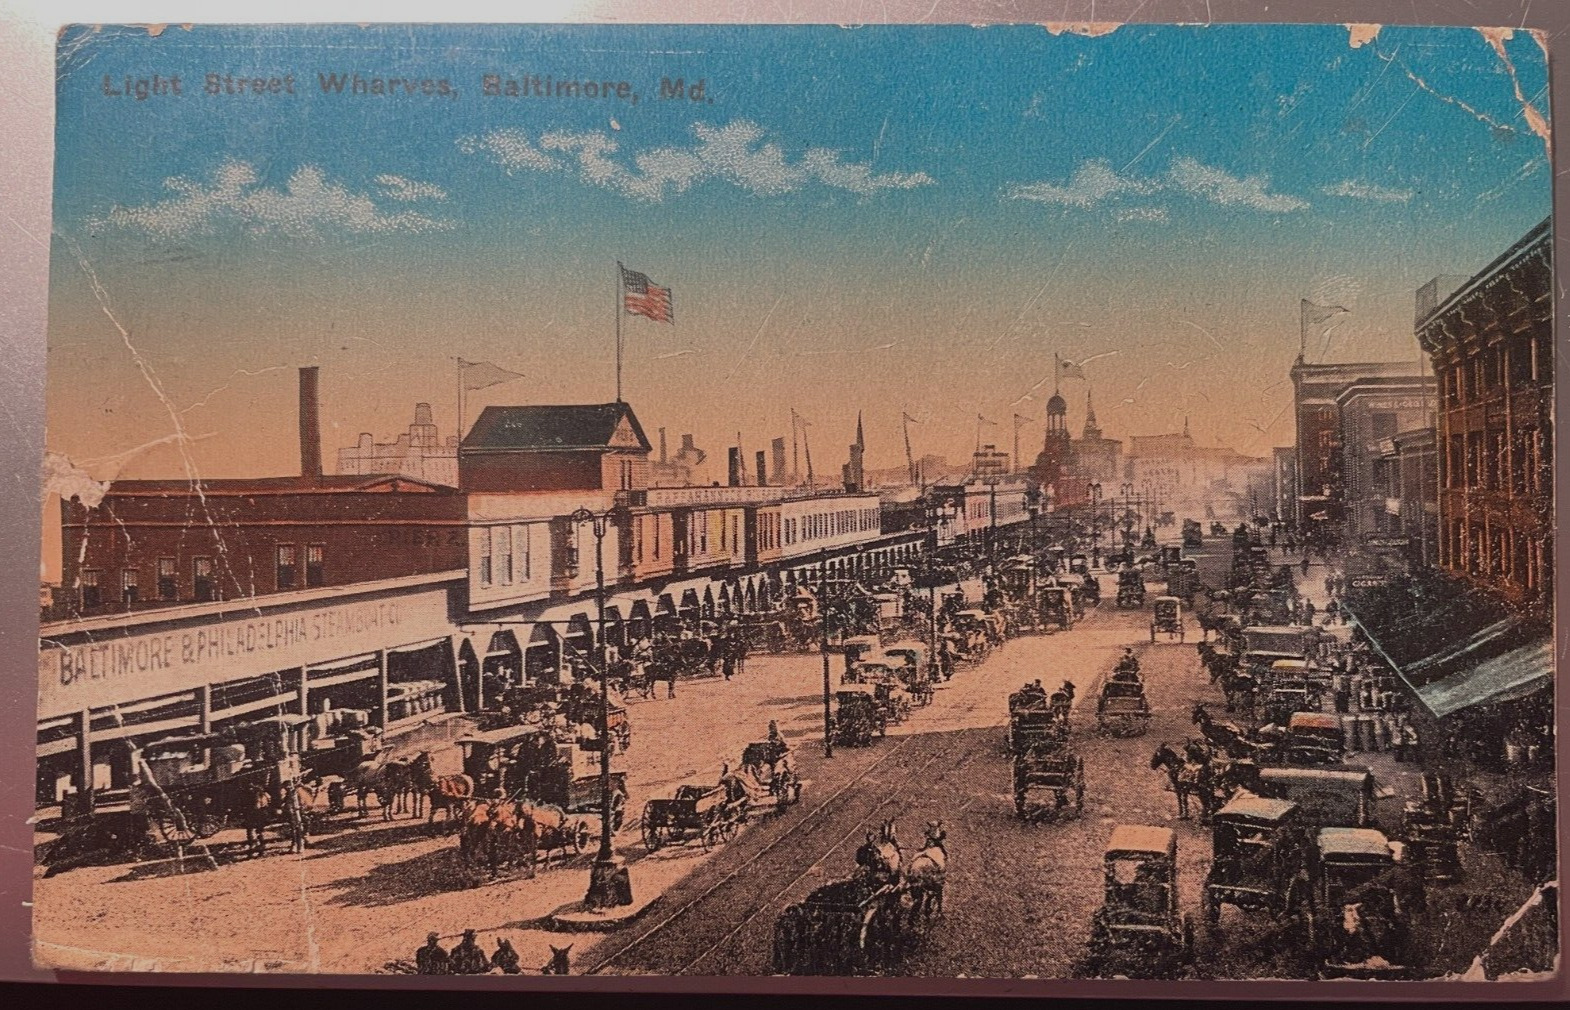 Vintage Postcard 1914 Light Street Wharves, Baltimore, Maryland (MD)